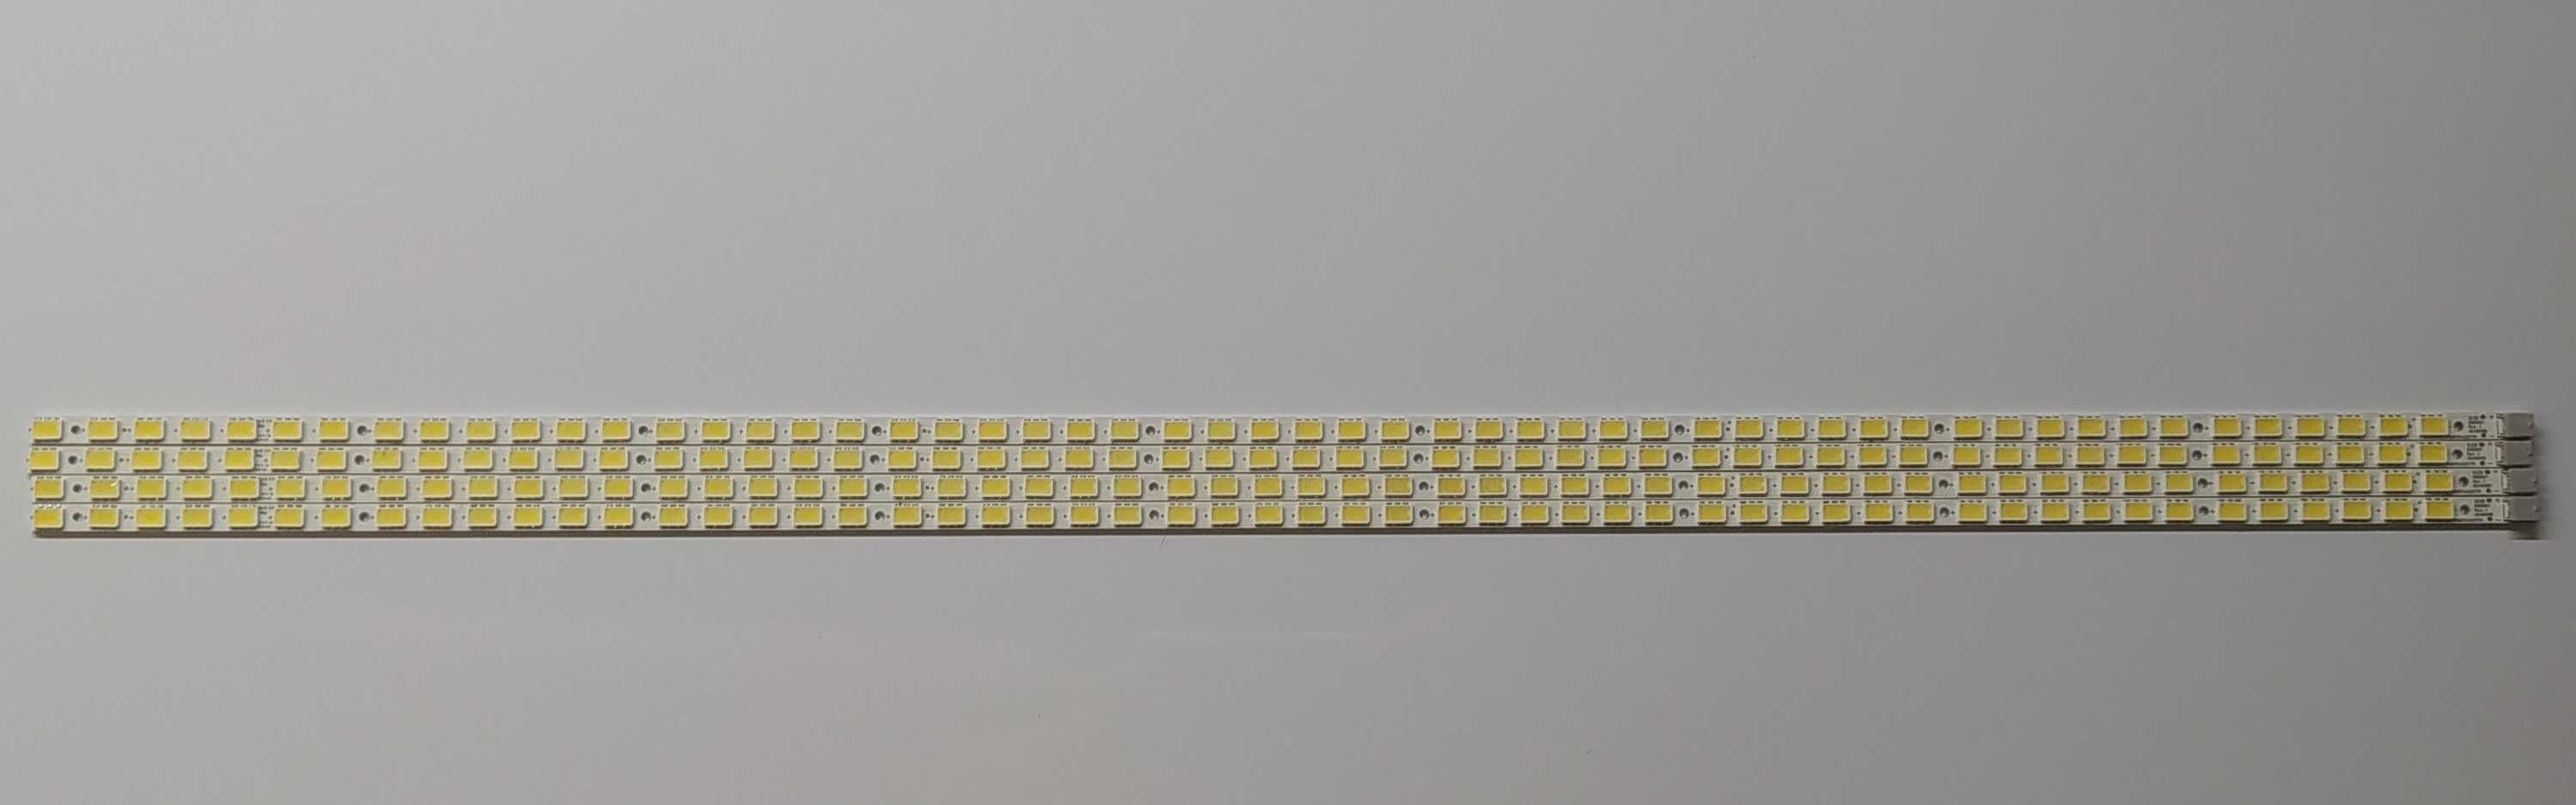 Led backlight strip KDL-46EX700